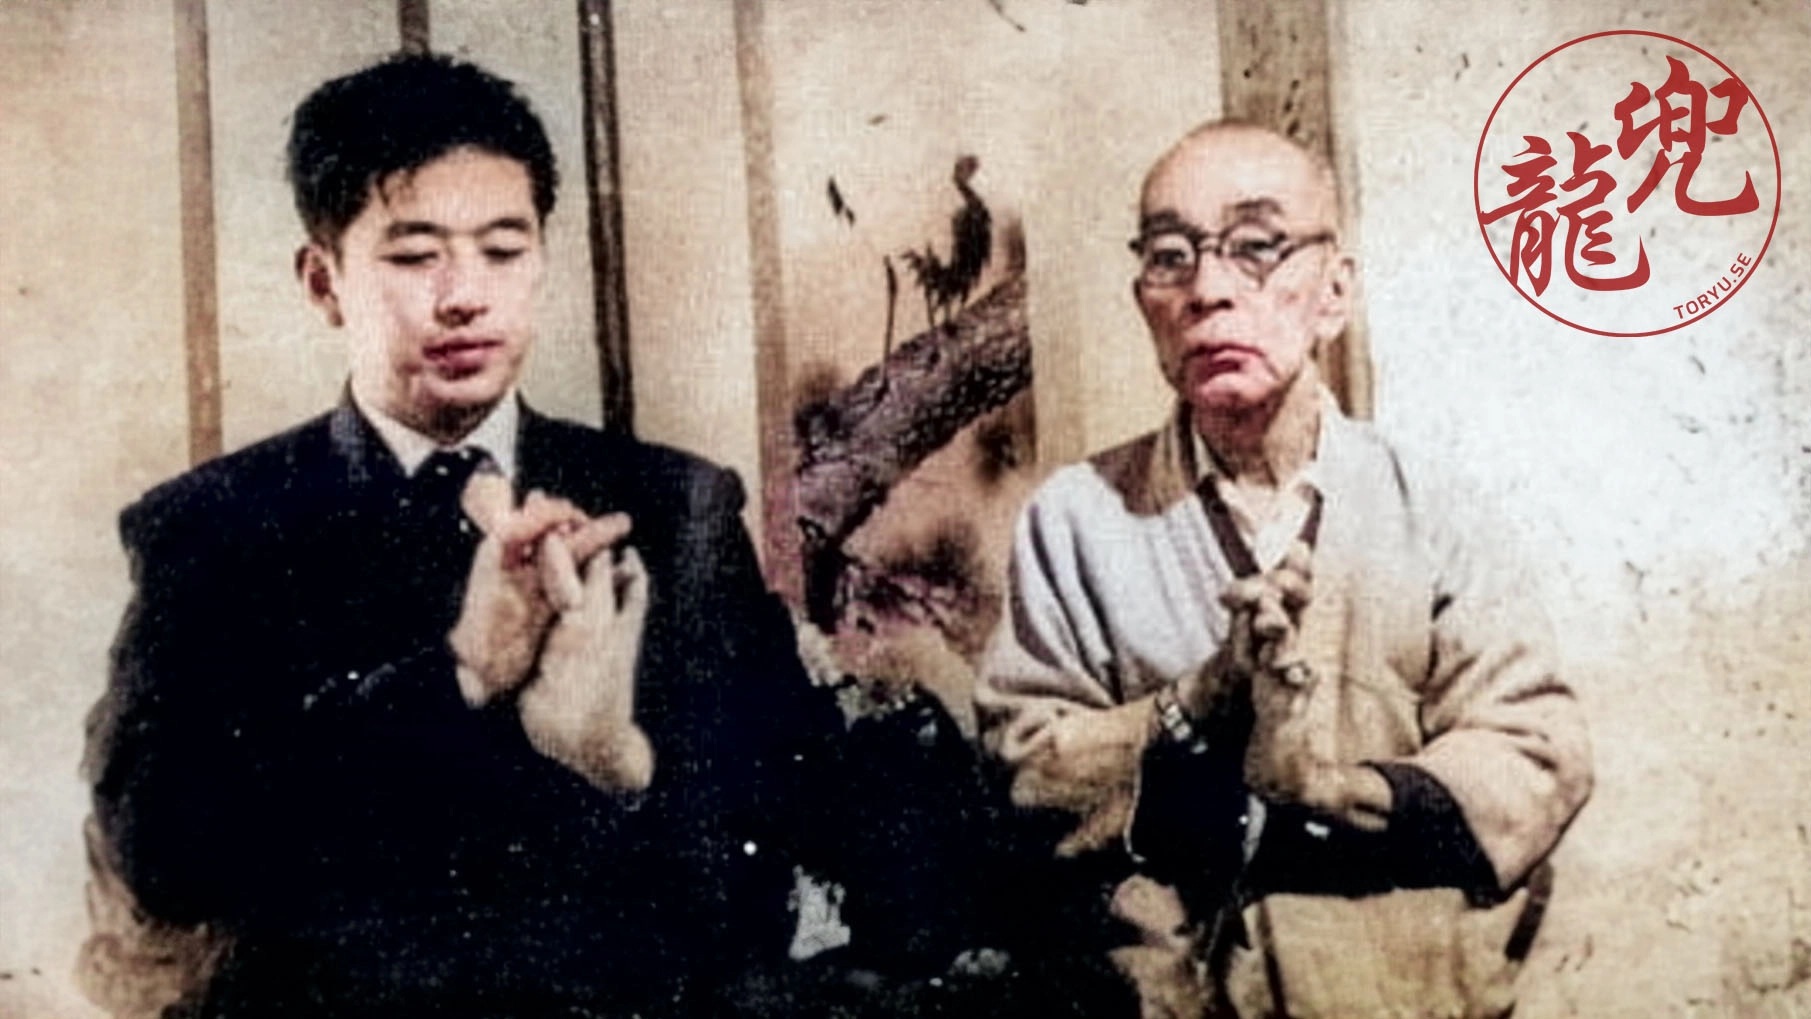 Takamatsu on the right is teaching Hatsumi Kuji